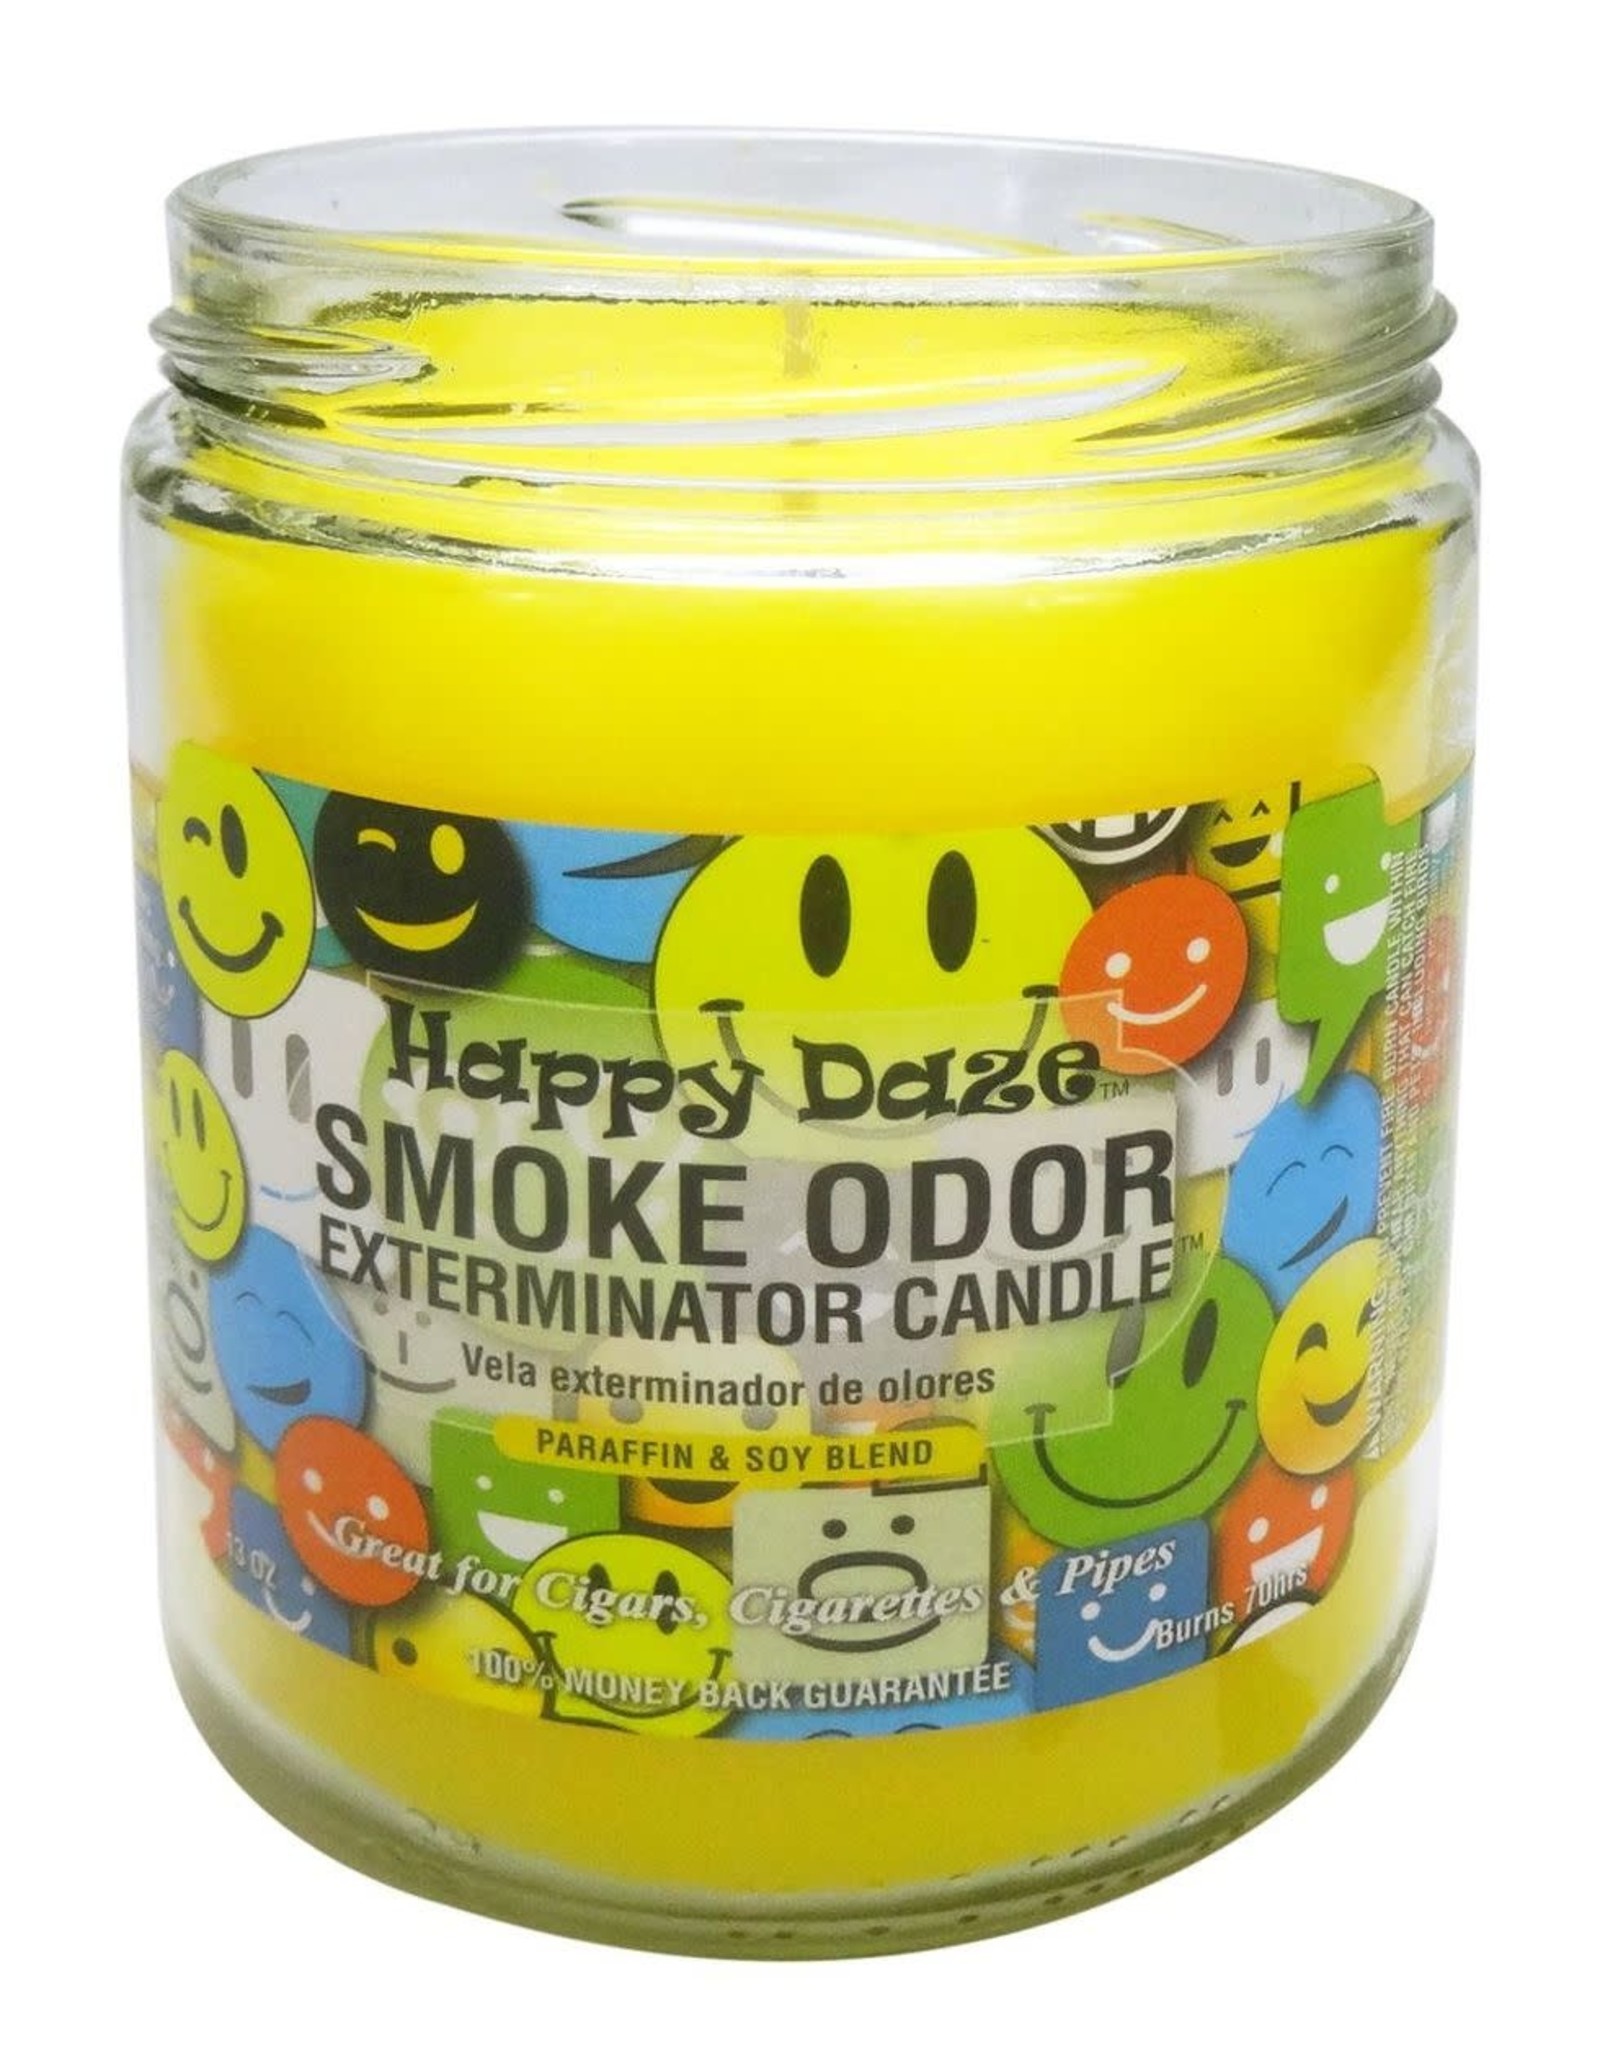 Smoke Odor Smoke Odor 13oz. Candle - Happy Daze